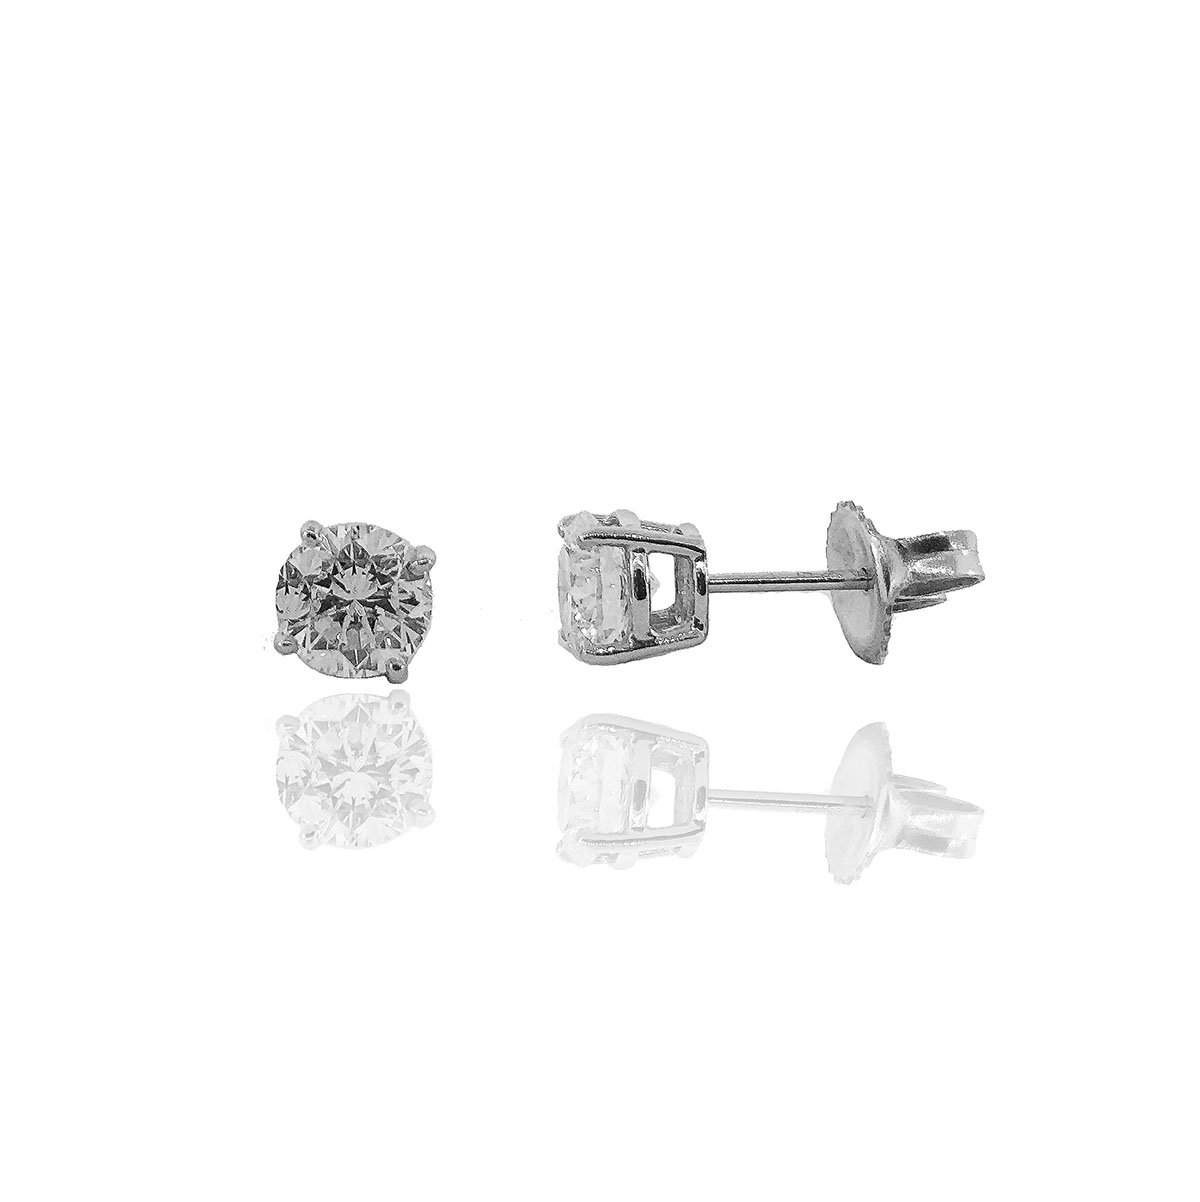 14K White Gold Diamond Stud Earrings, 20 Days of Diamonds, Diamond Essentials, Holiday Gifts, Holiday 2017, NYC Diamond District